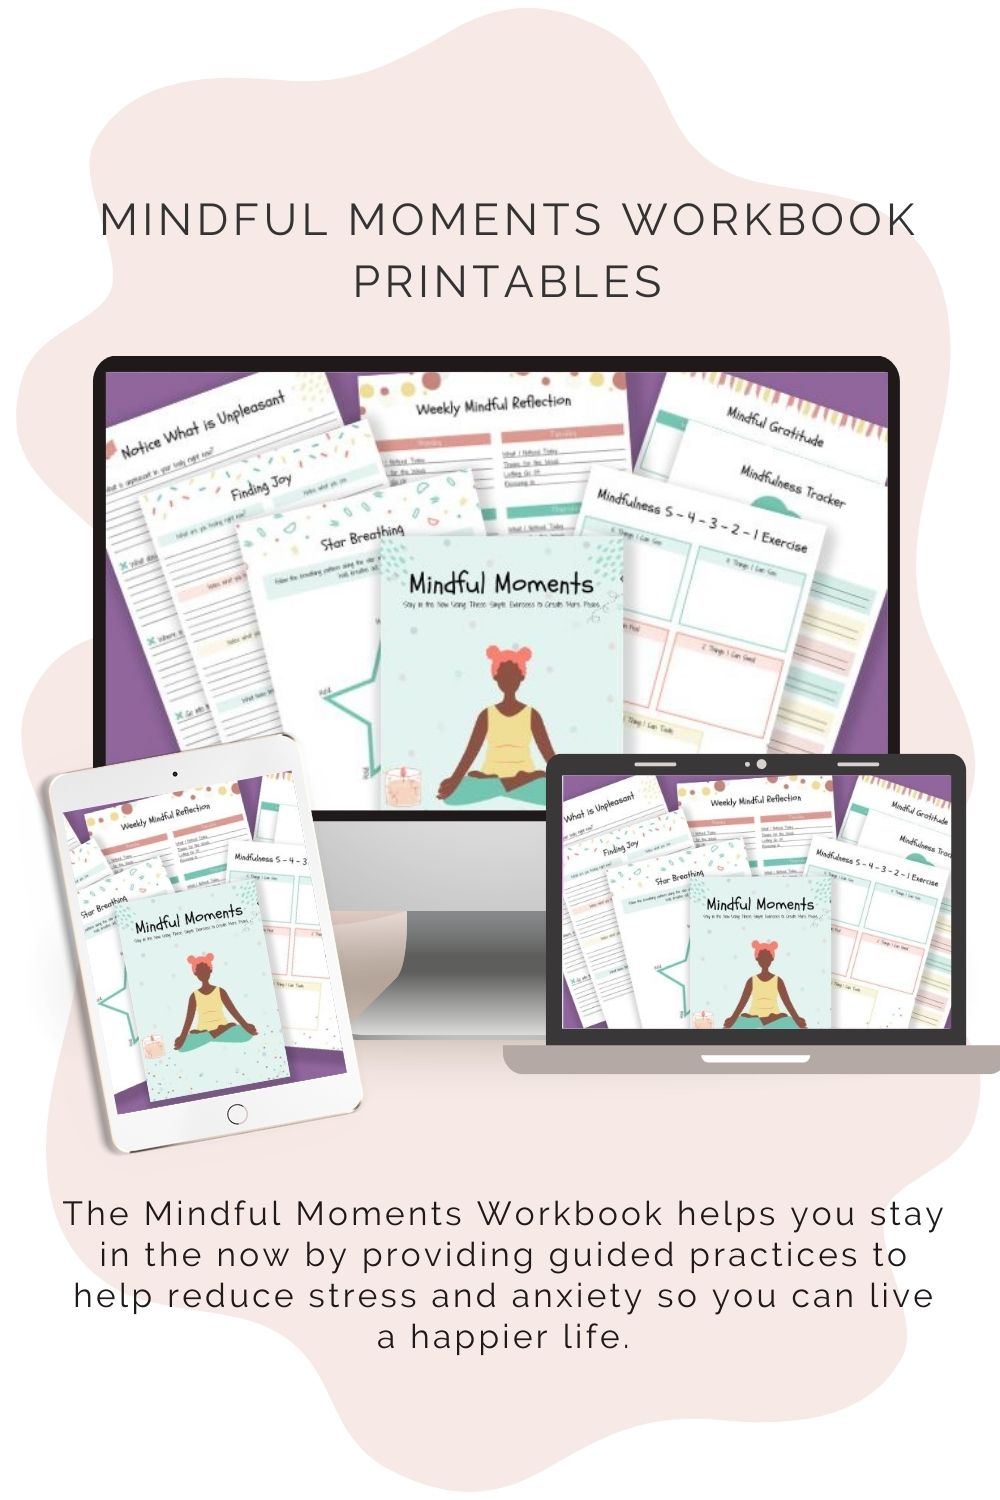 Mindful Moments Workbook Printable. R336